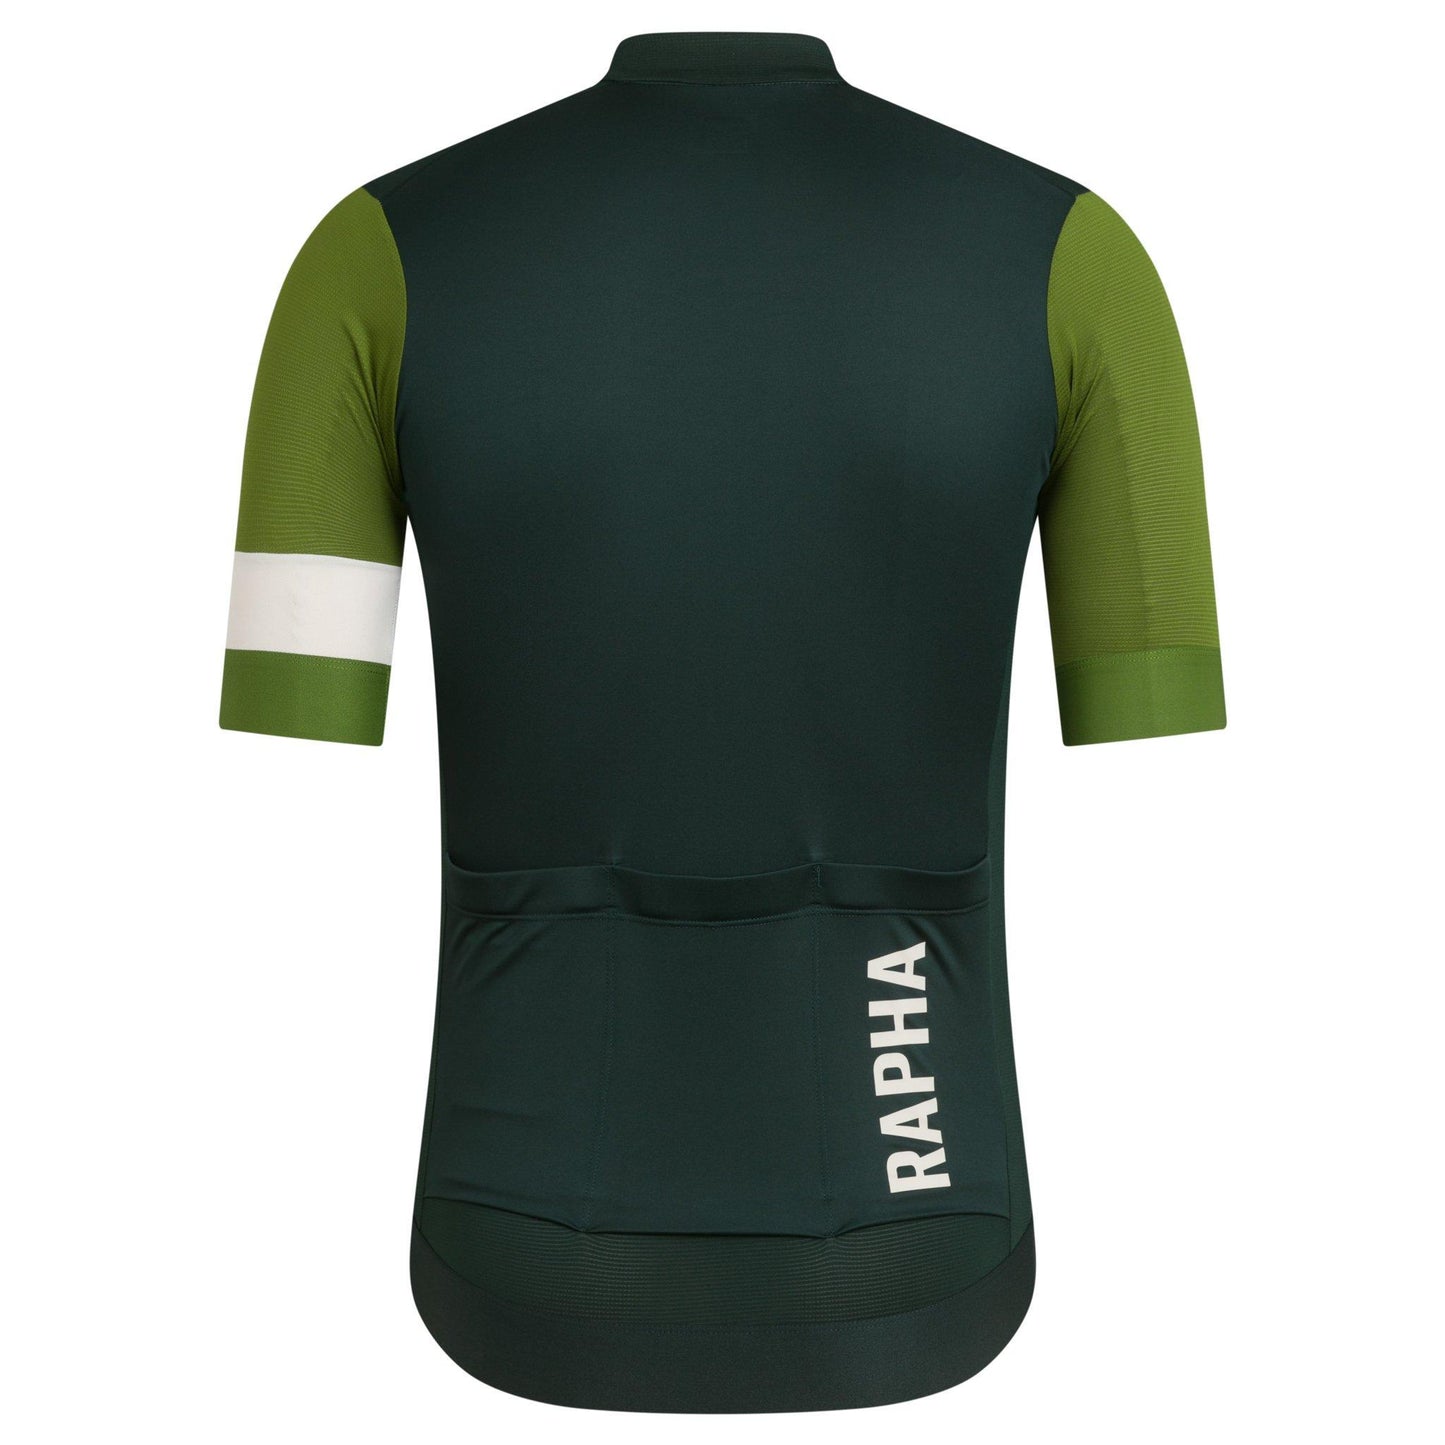 Rapha Men's Pro Team Training Jersey - Dark Green/Green